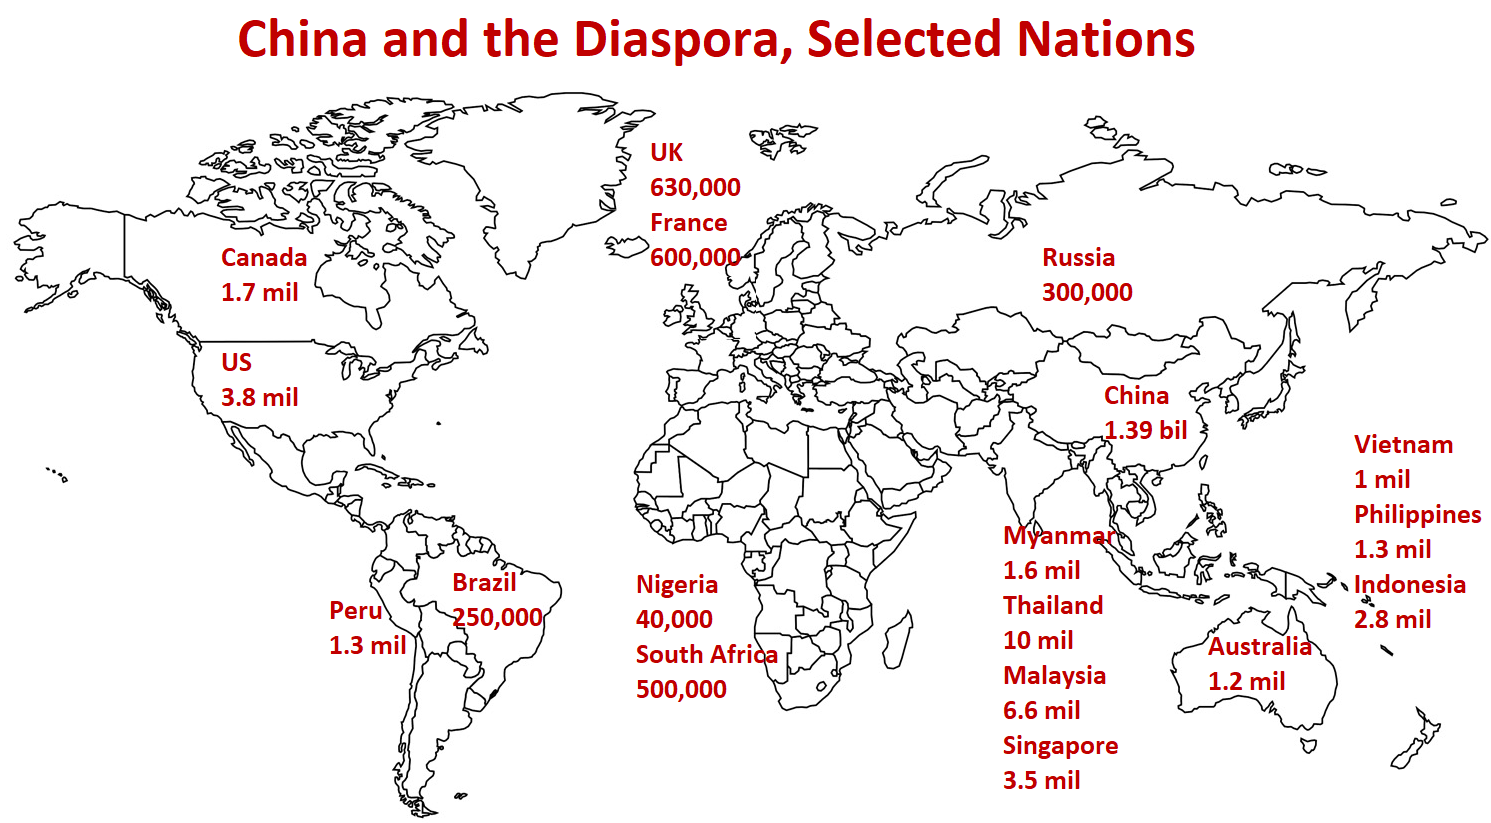 China and Its Diaspora on World Map, population: China  1.39 bil   UK 630,000  France 600,000  Italy  330,000  Russia 300,000  Nigeria 	 40,000 South Africa  500,000   Myanmar 1.6 mil Thailand 10 mil Malaysia  6.6 mil Singapore  3.5 mil   Vietnam  1 mil Indonesia  2.8 mil Philippines 1.3 mil  Canada 1.7 mil  US  3.8 mil   Peru  1.3 mil  Brazil 250,000  Australia 1.2 mil